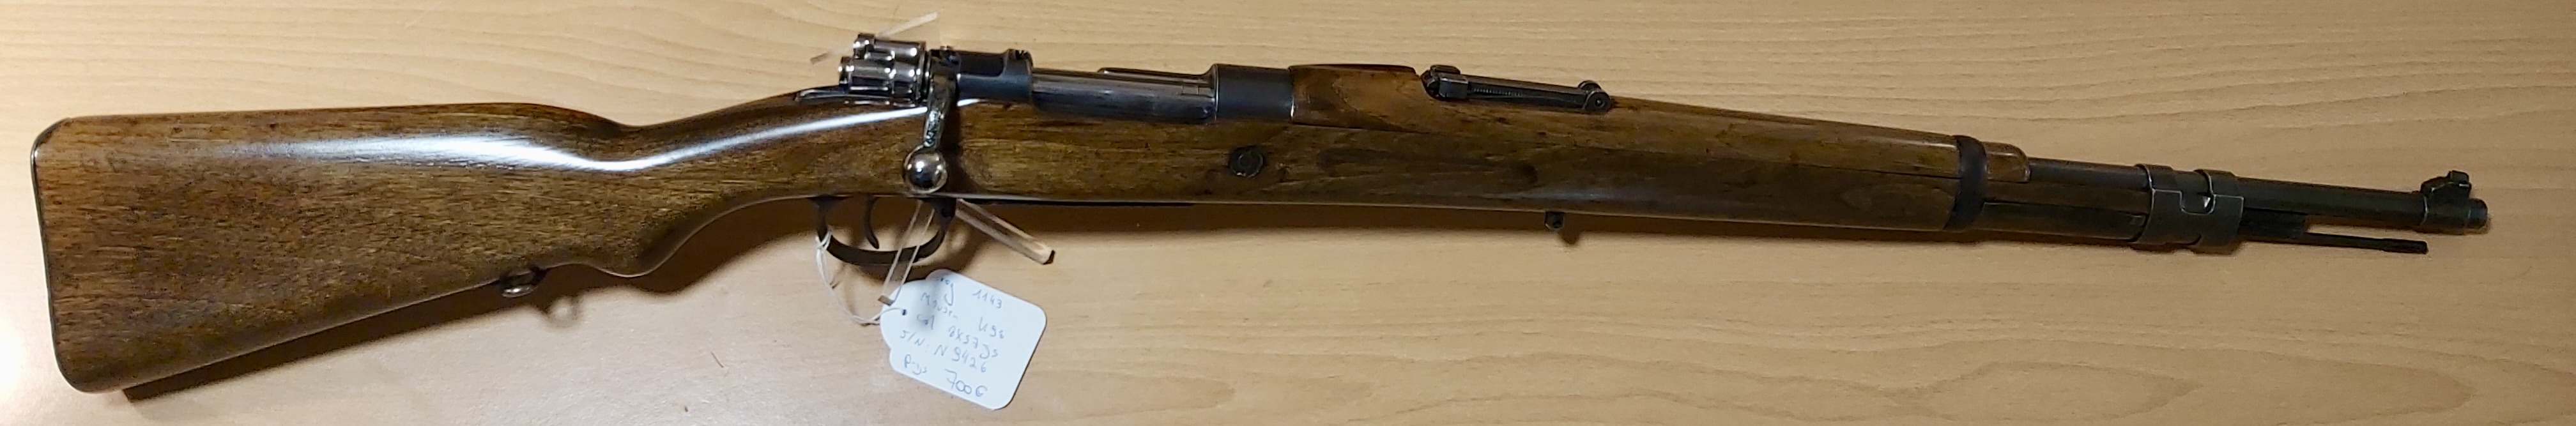 Mauser K98, cal 8x57js, Prijs 700€